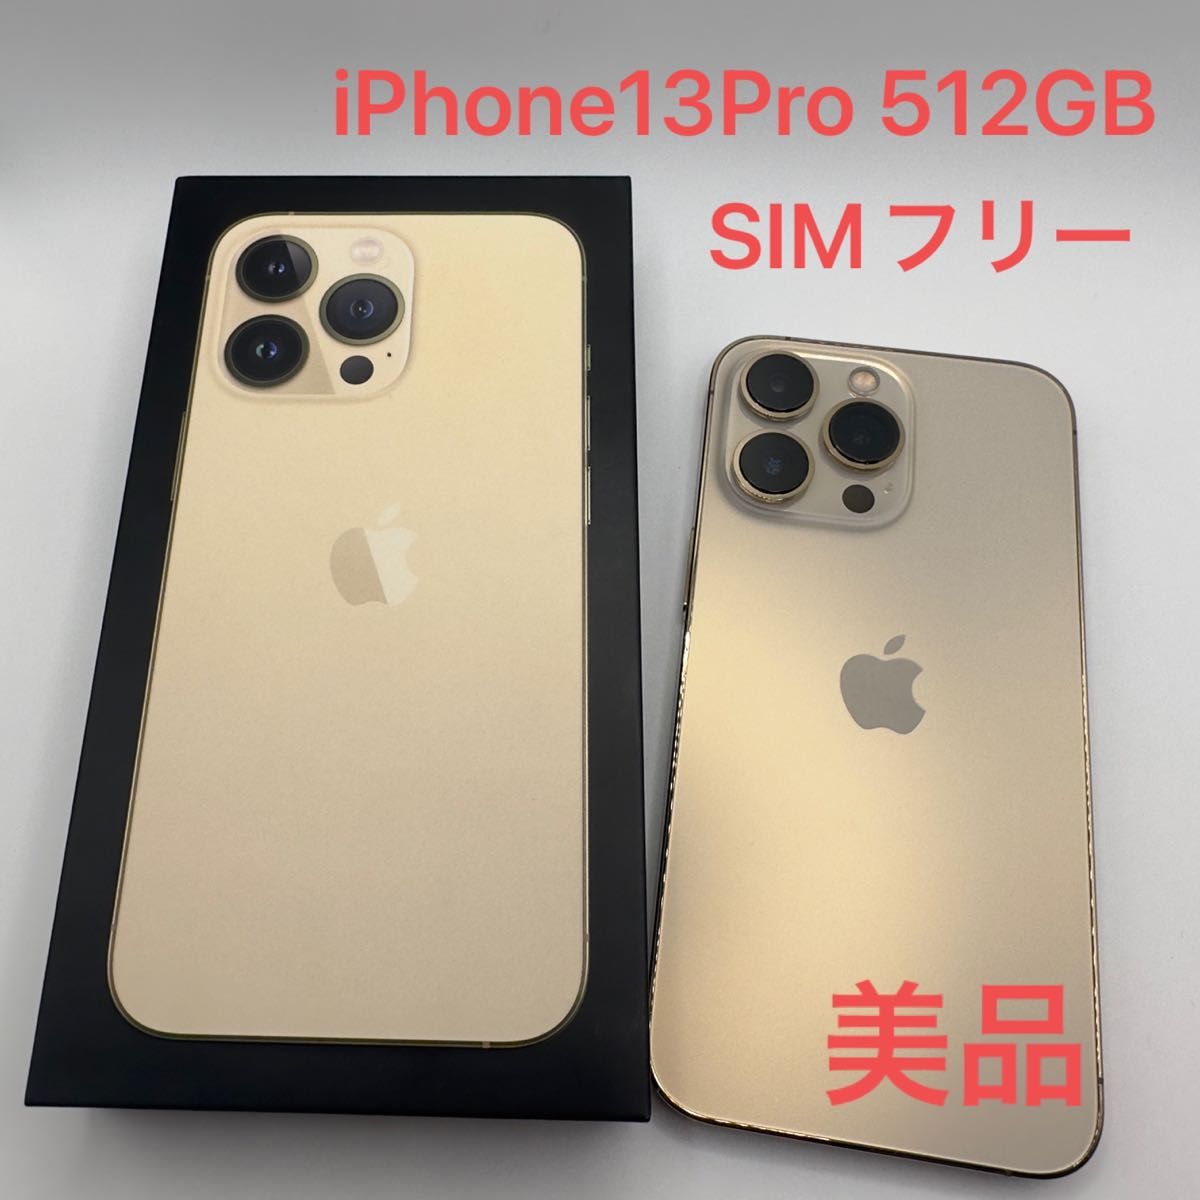 iPhone13Pro ゴールド 512 GB SIMフリー - スマートフォン本体